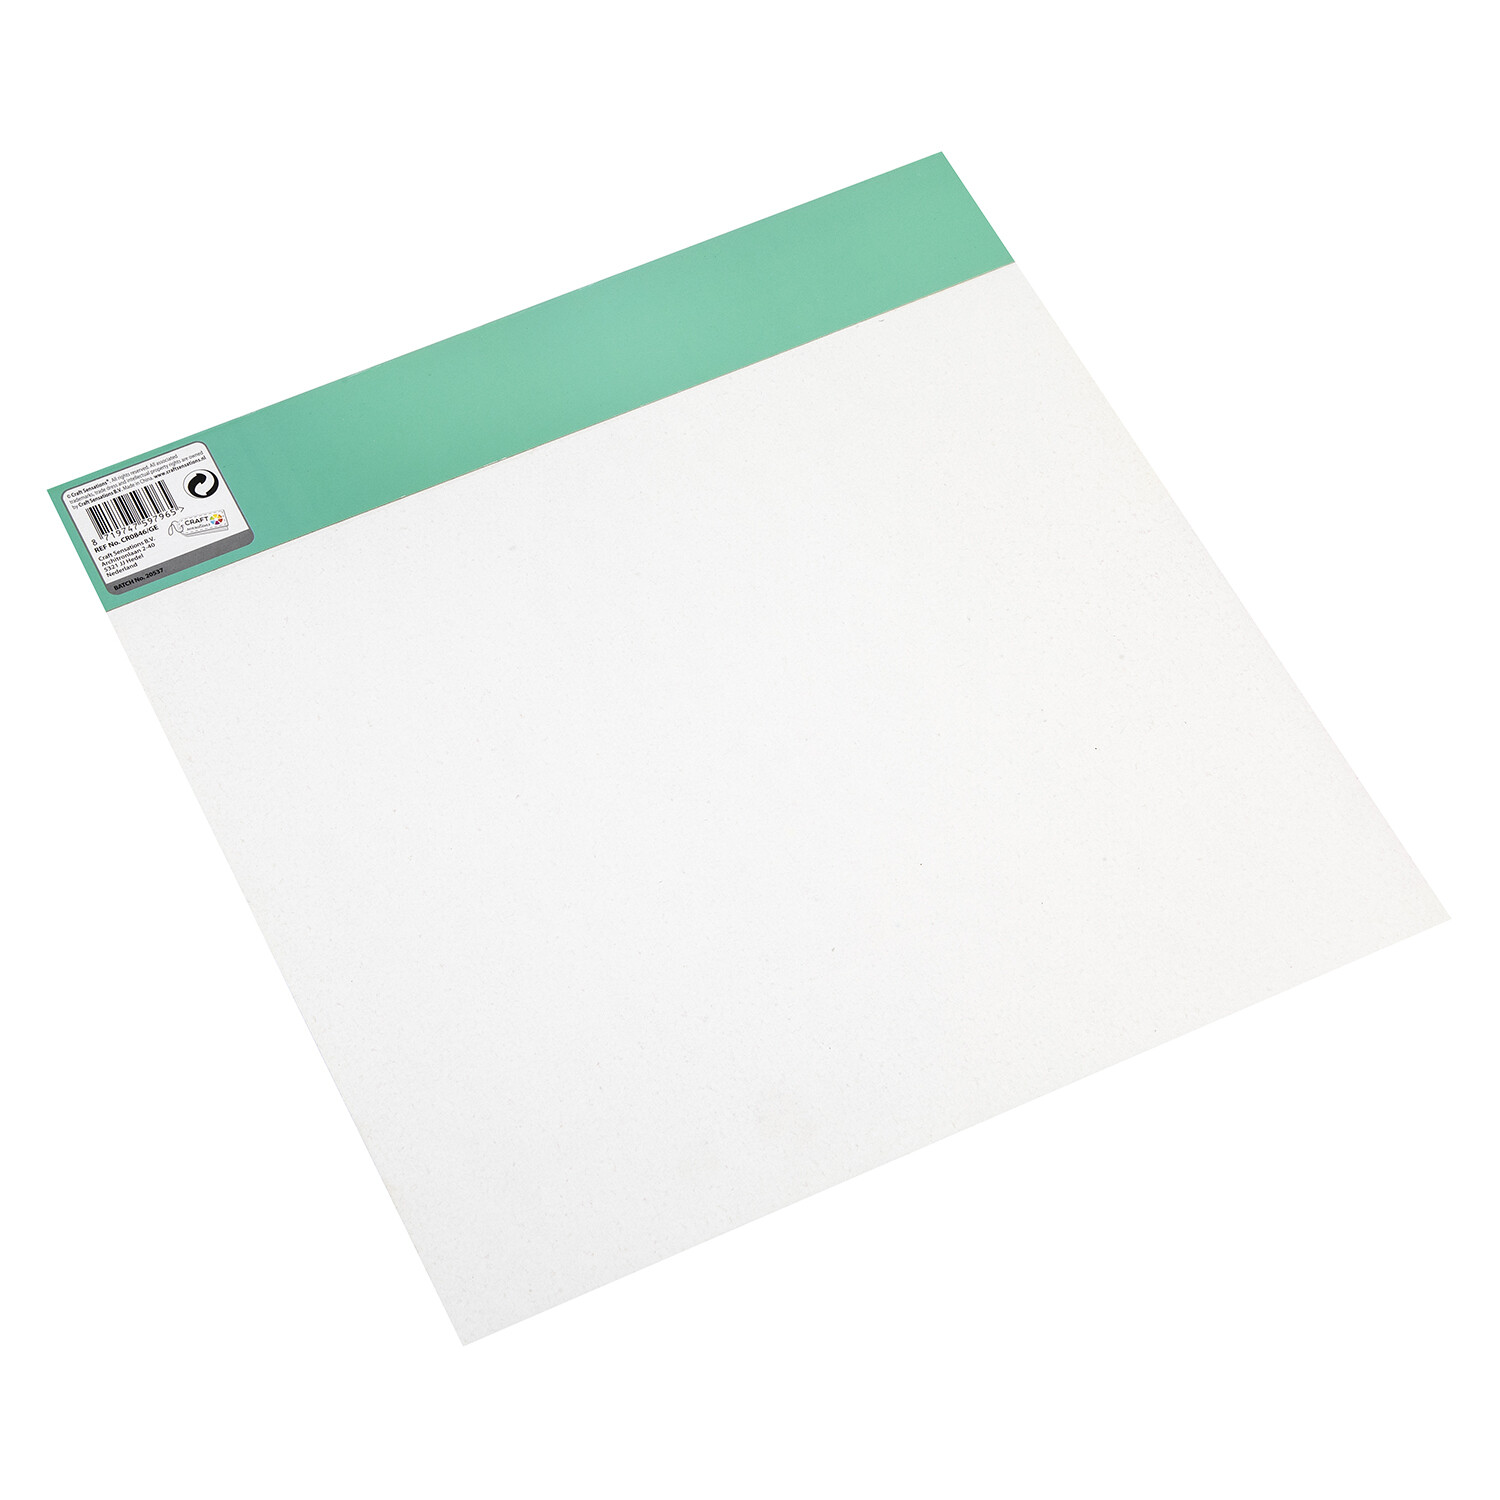 Single CRAFT Sensations Design Pad Scrapbooking Paper in Assorted styles Image 2